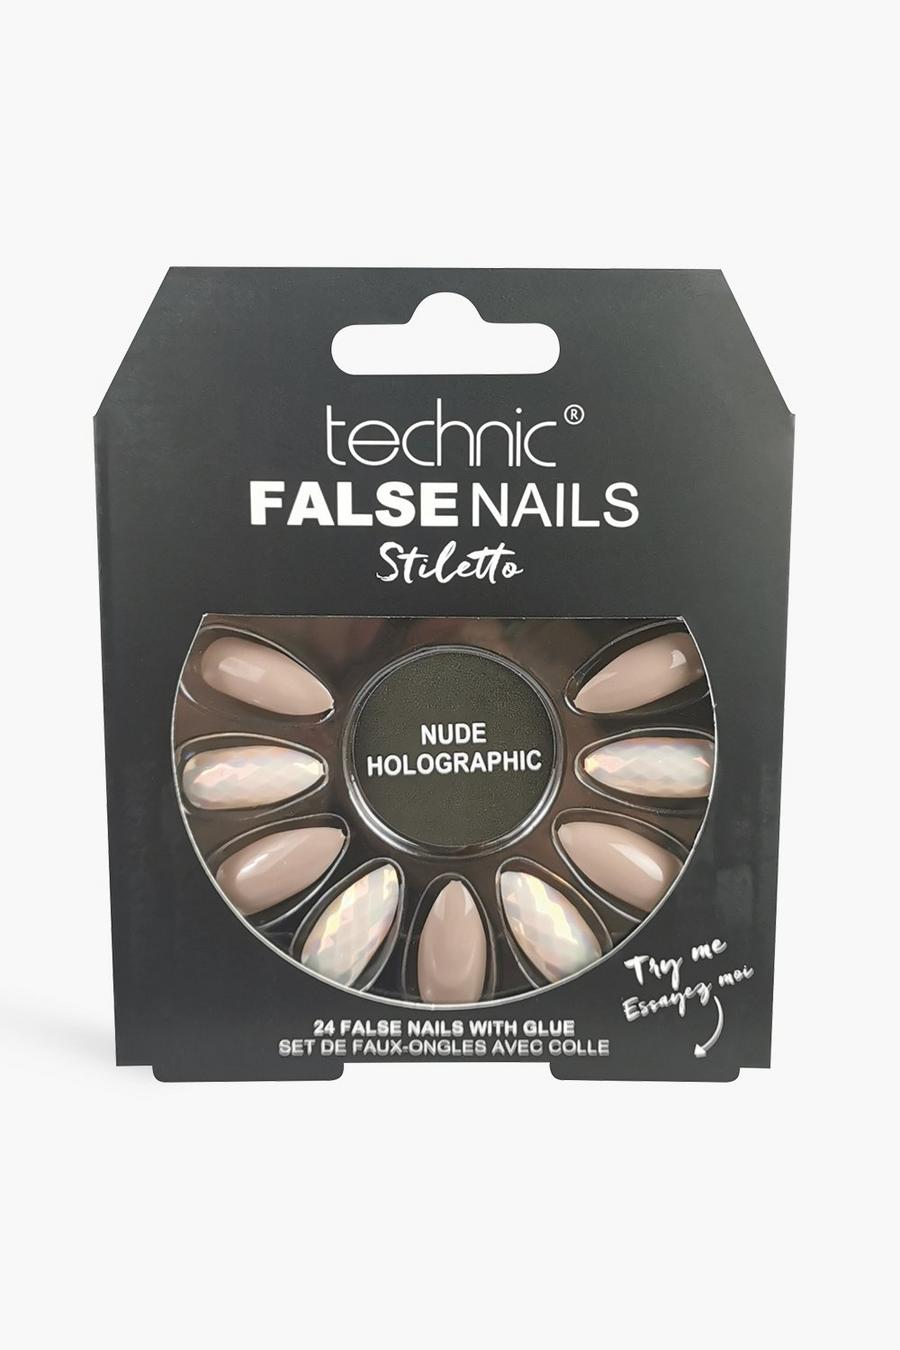 Technic False Nails-stiletto Nude Holographic